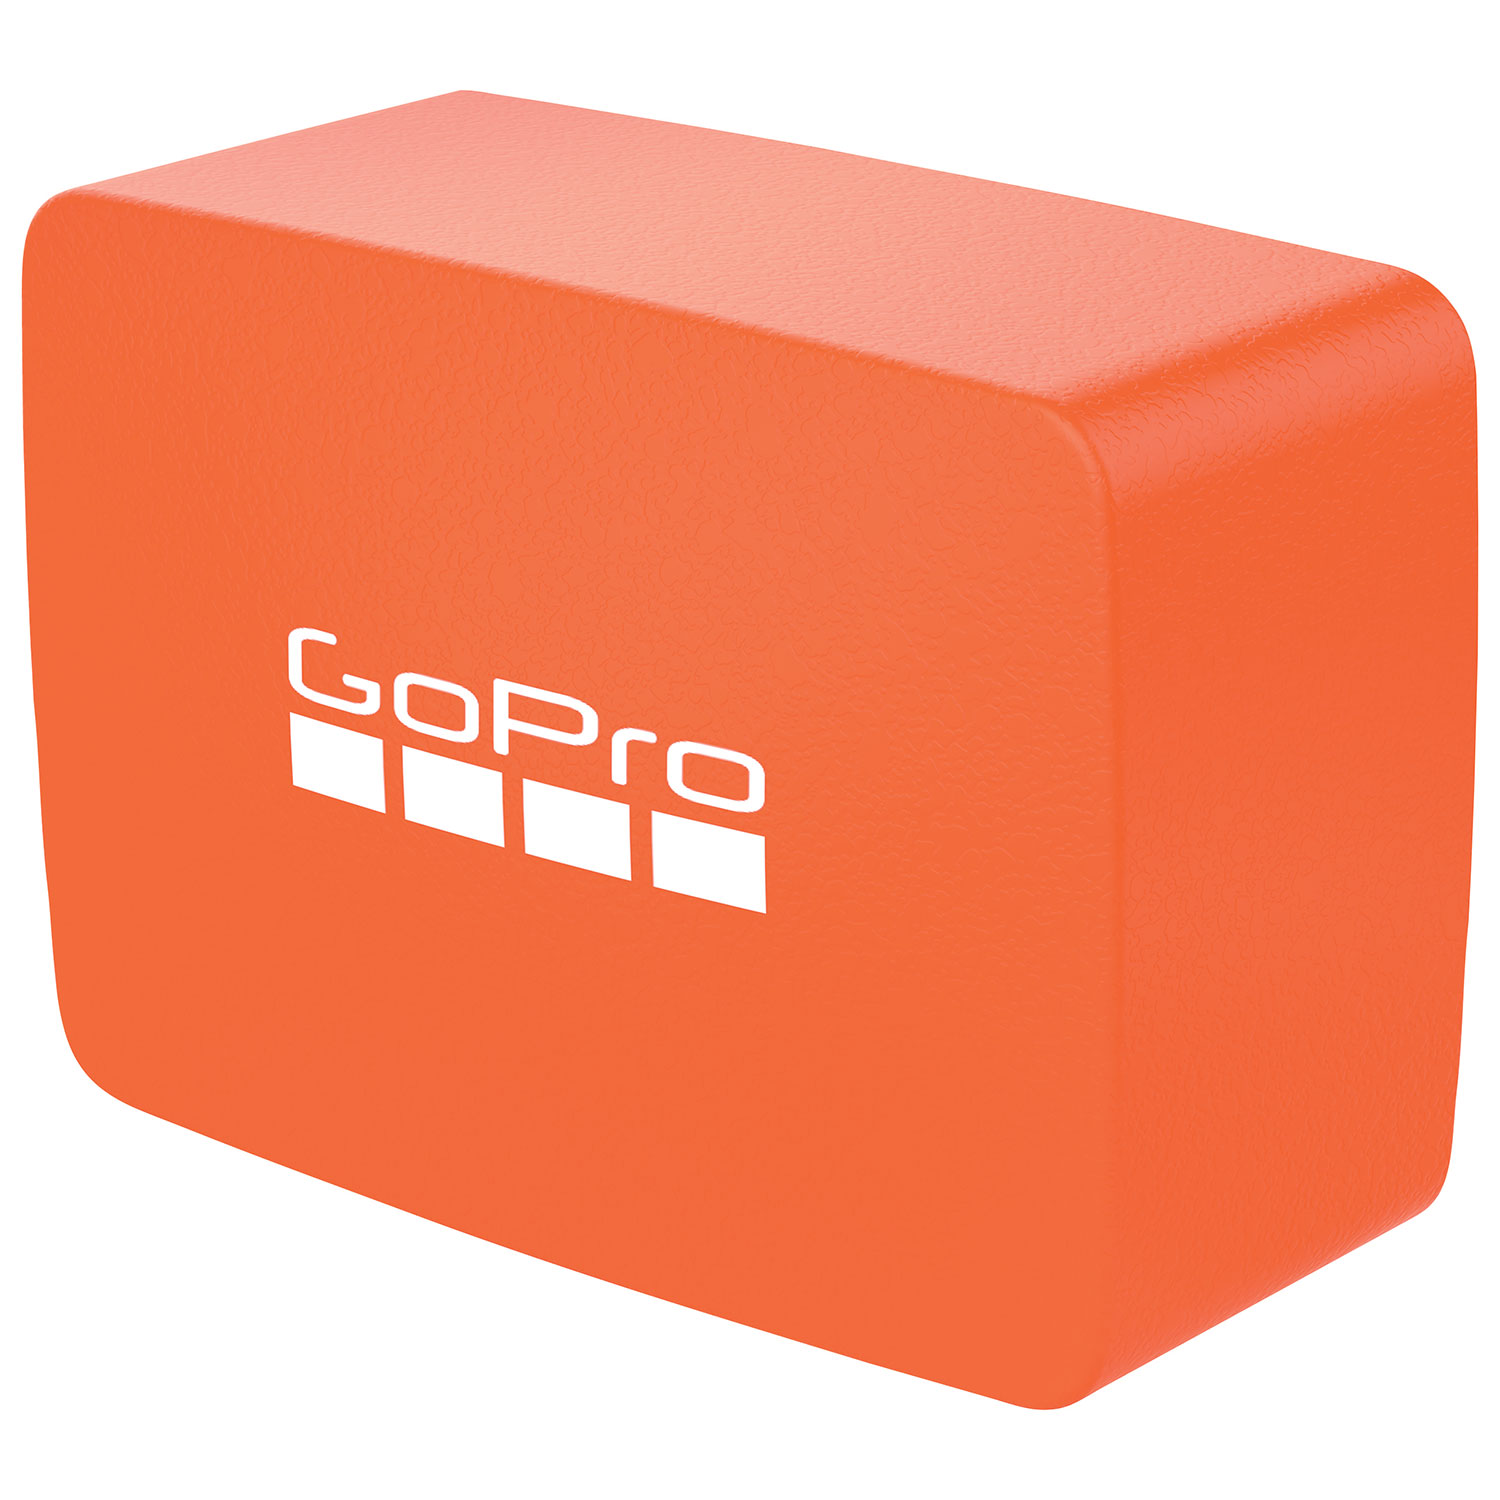 GoPro HERO5/HERO4 Black/HERO4 Silver Floaty - Orange